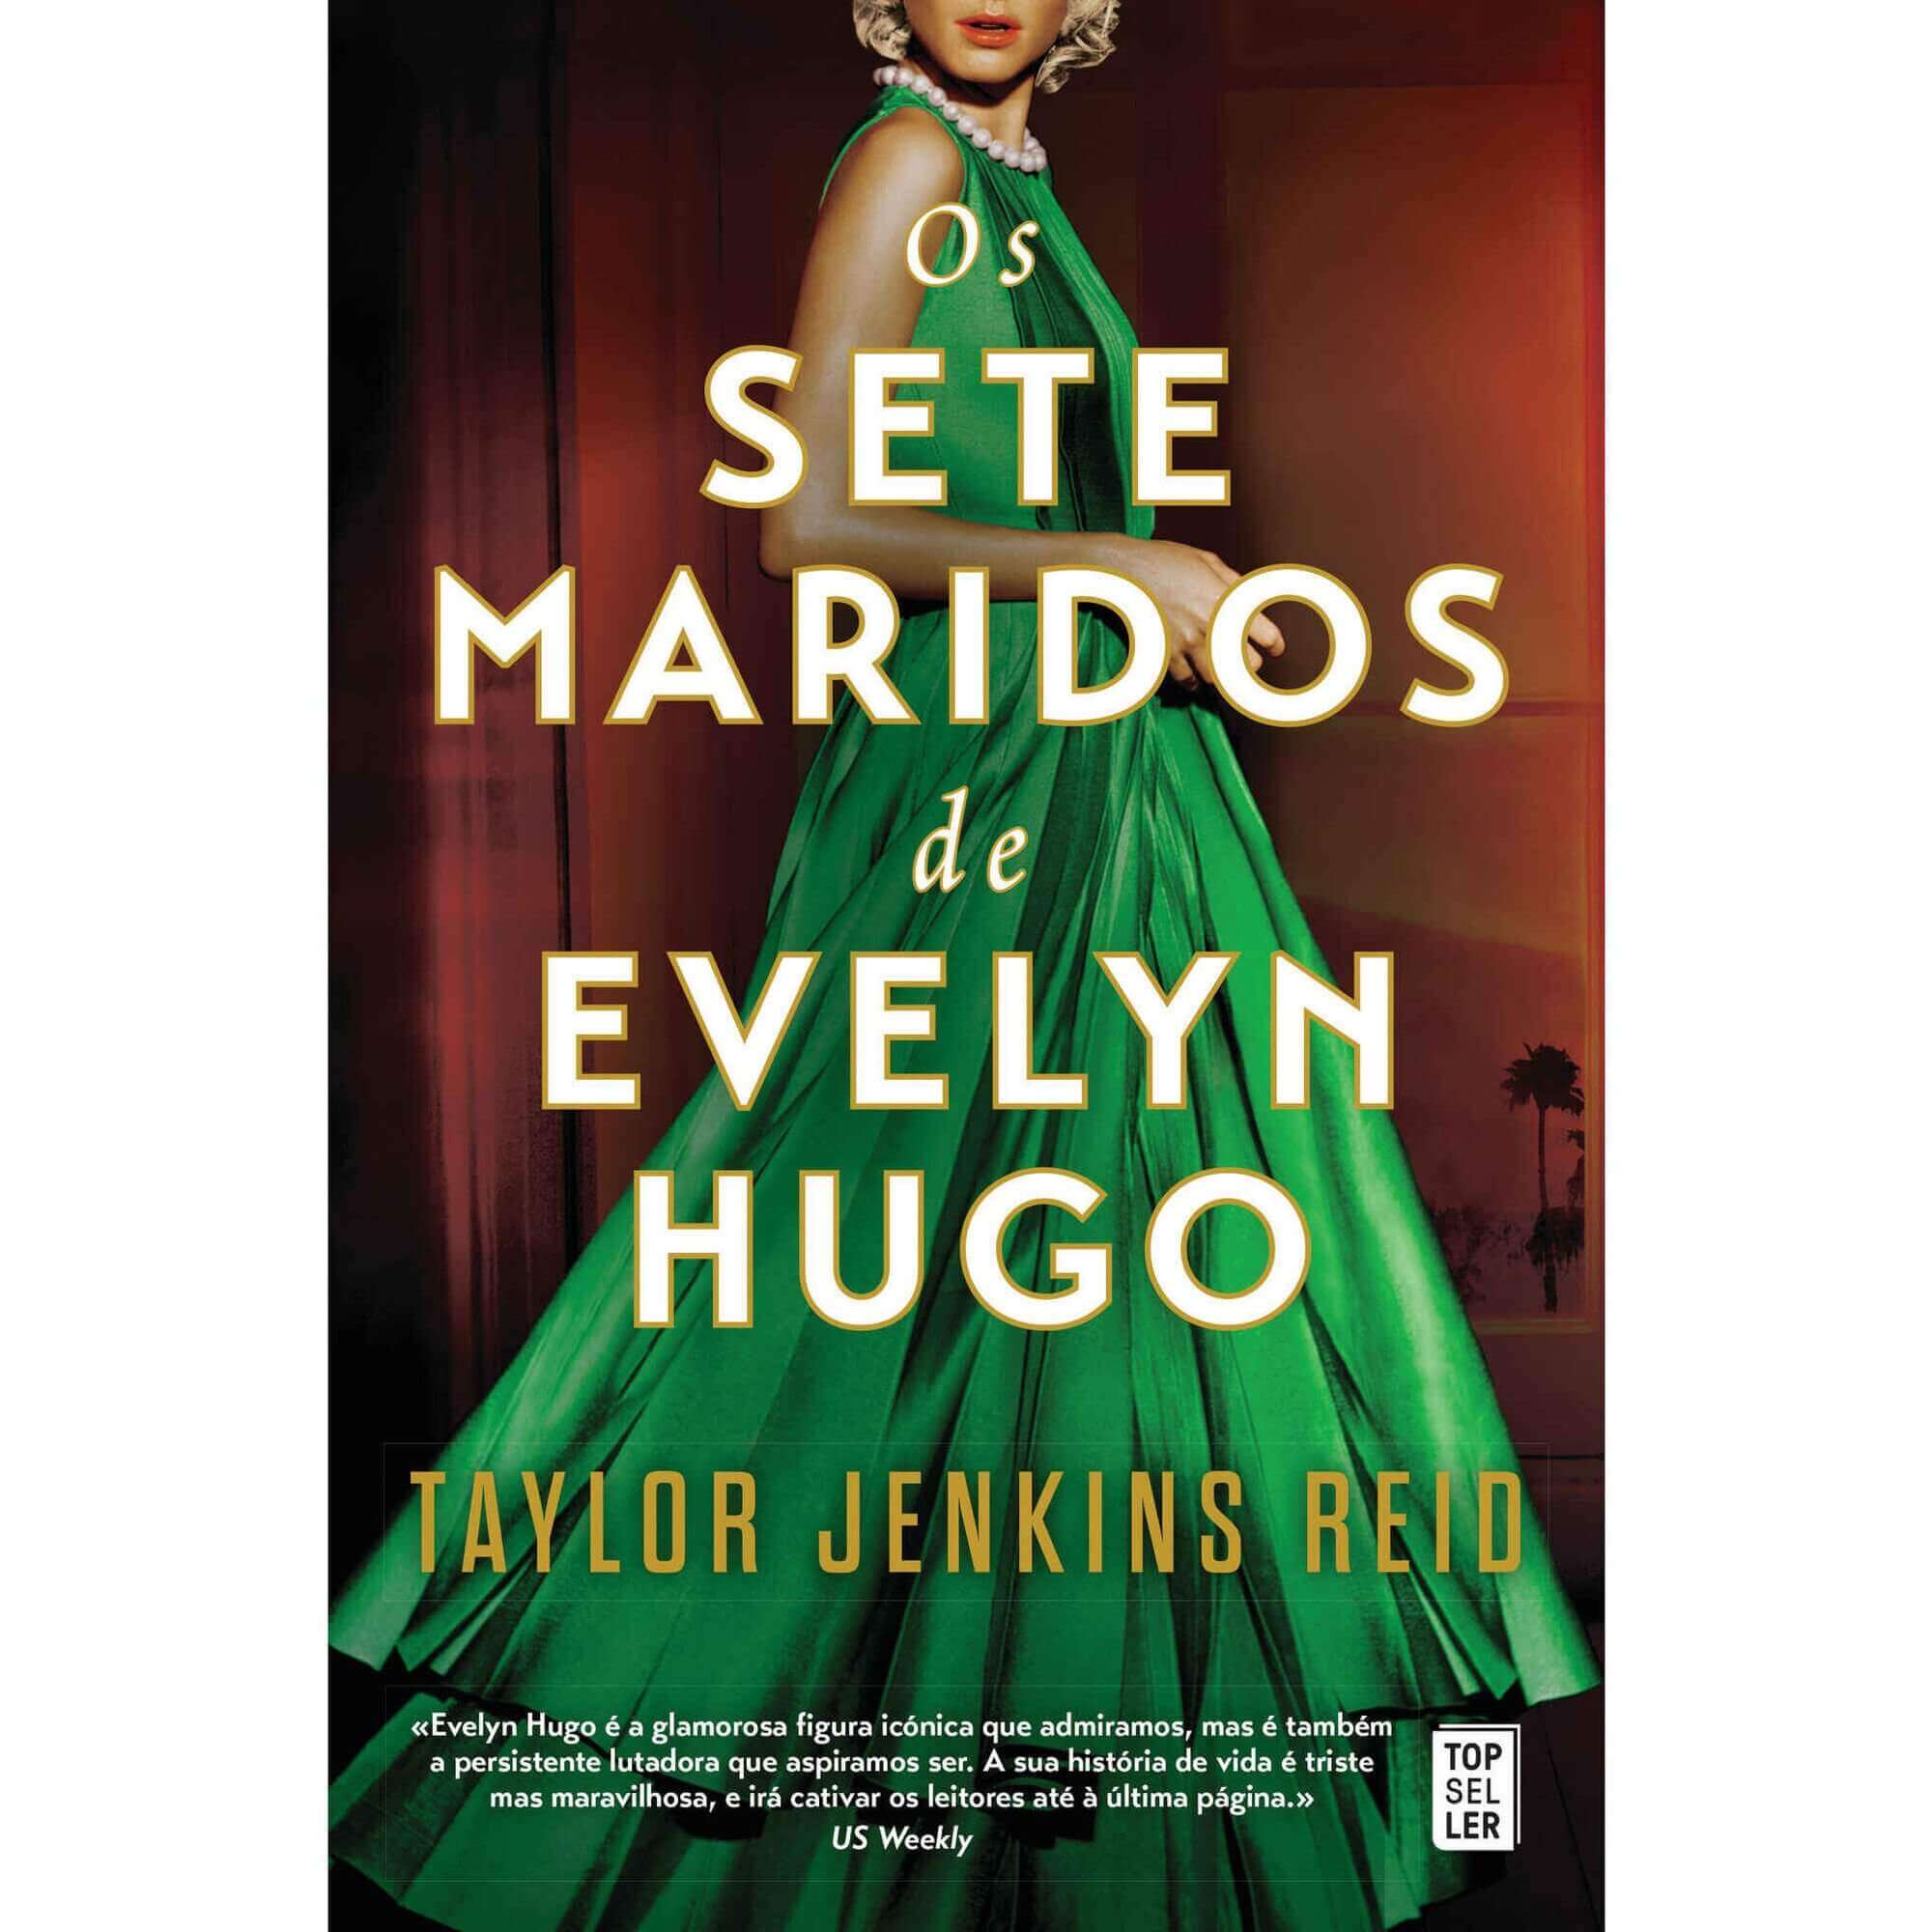 os sete maridos de Evelyn Hugo Taylor Jenkins reid